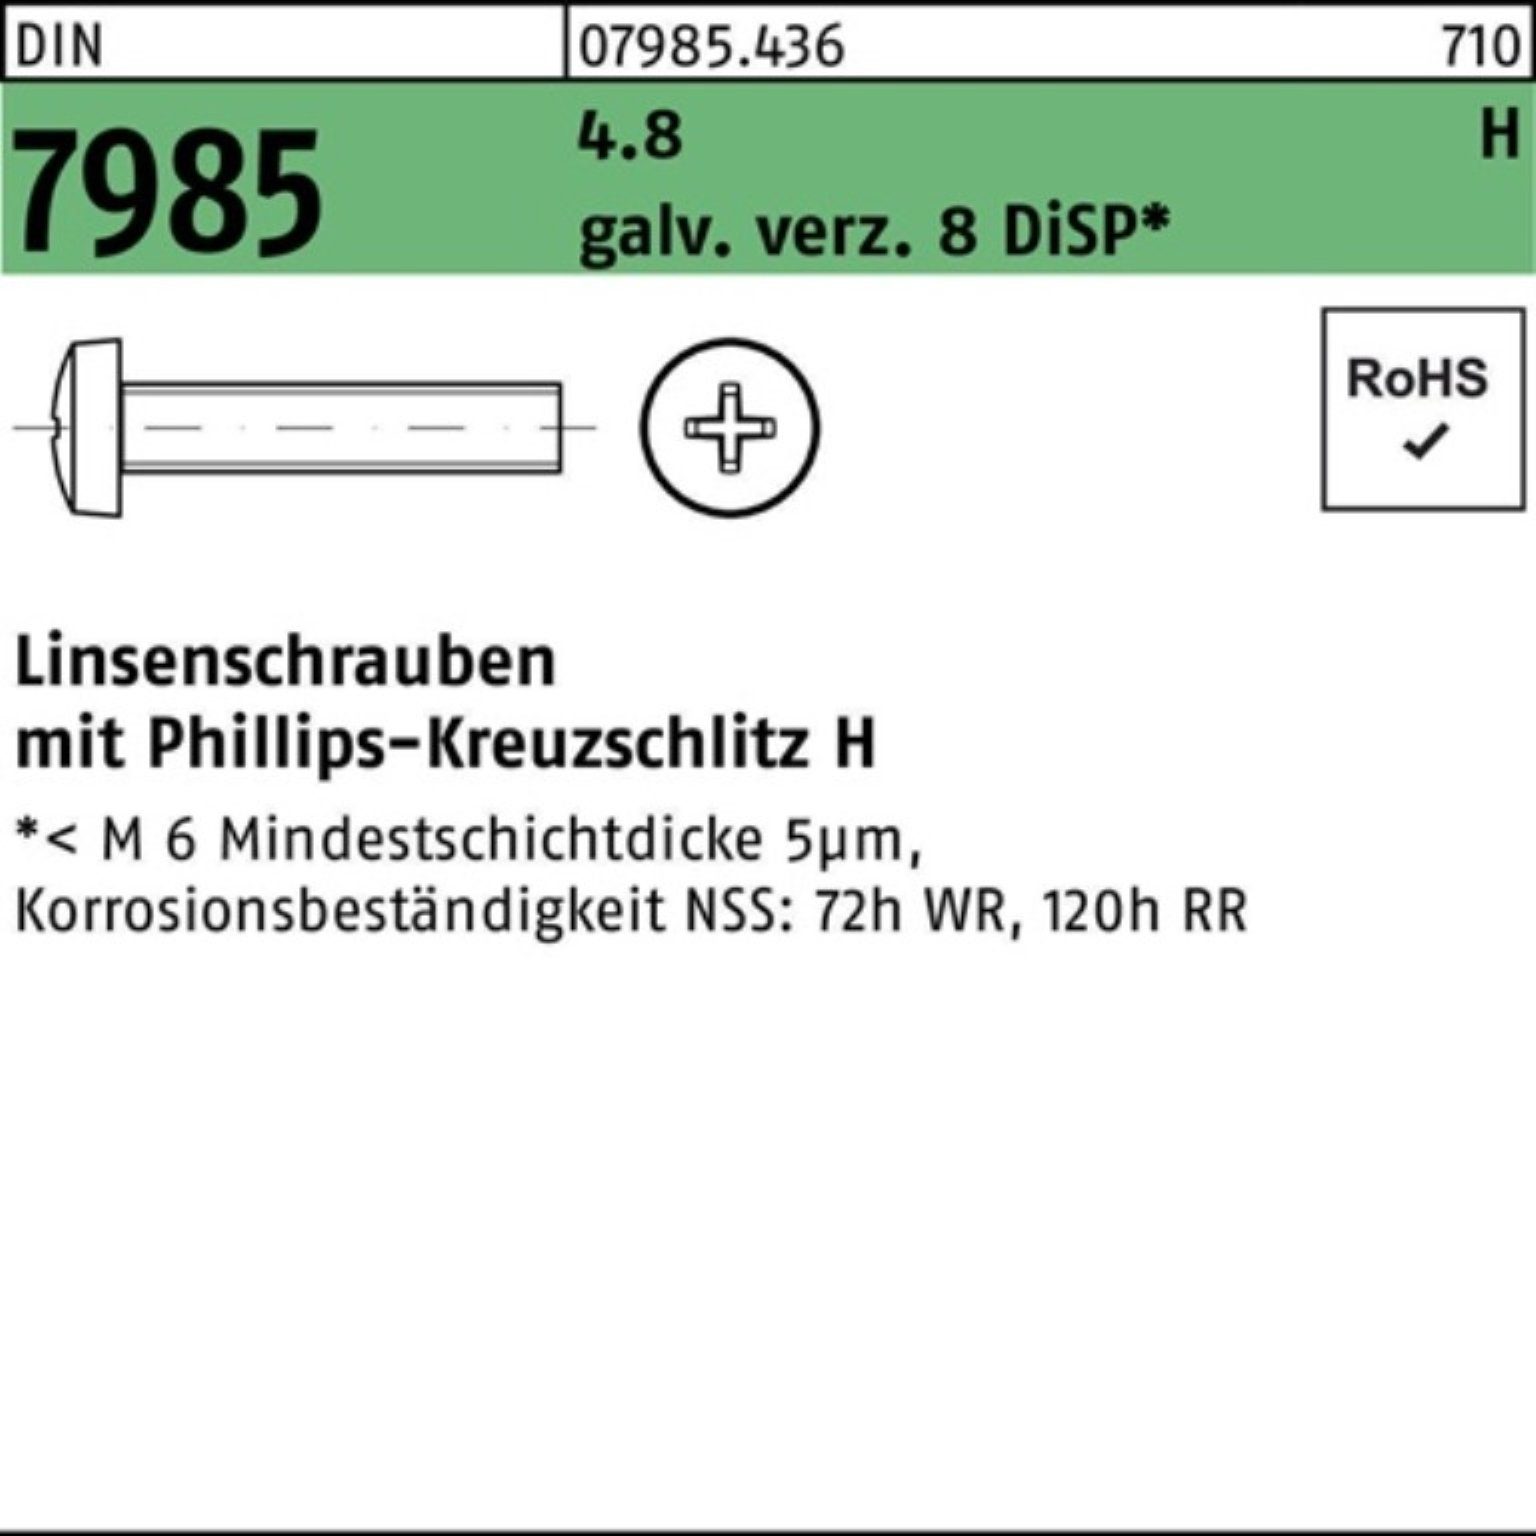 Reyher Linsenschraube 2000er Pack Linsenschraube 4.8 7985 DiSP 2 8 PH galv.verz. M4x16-H DIN